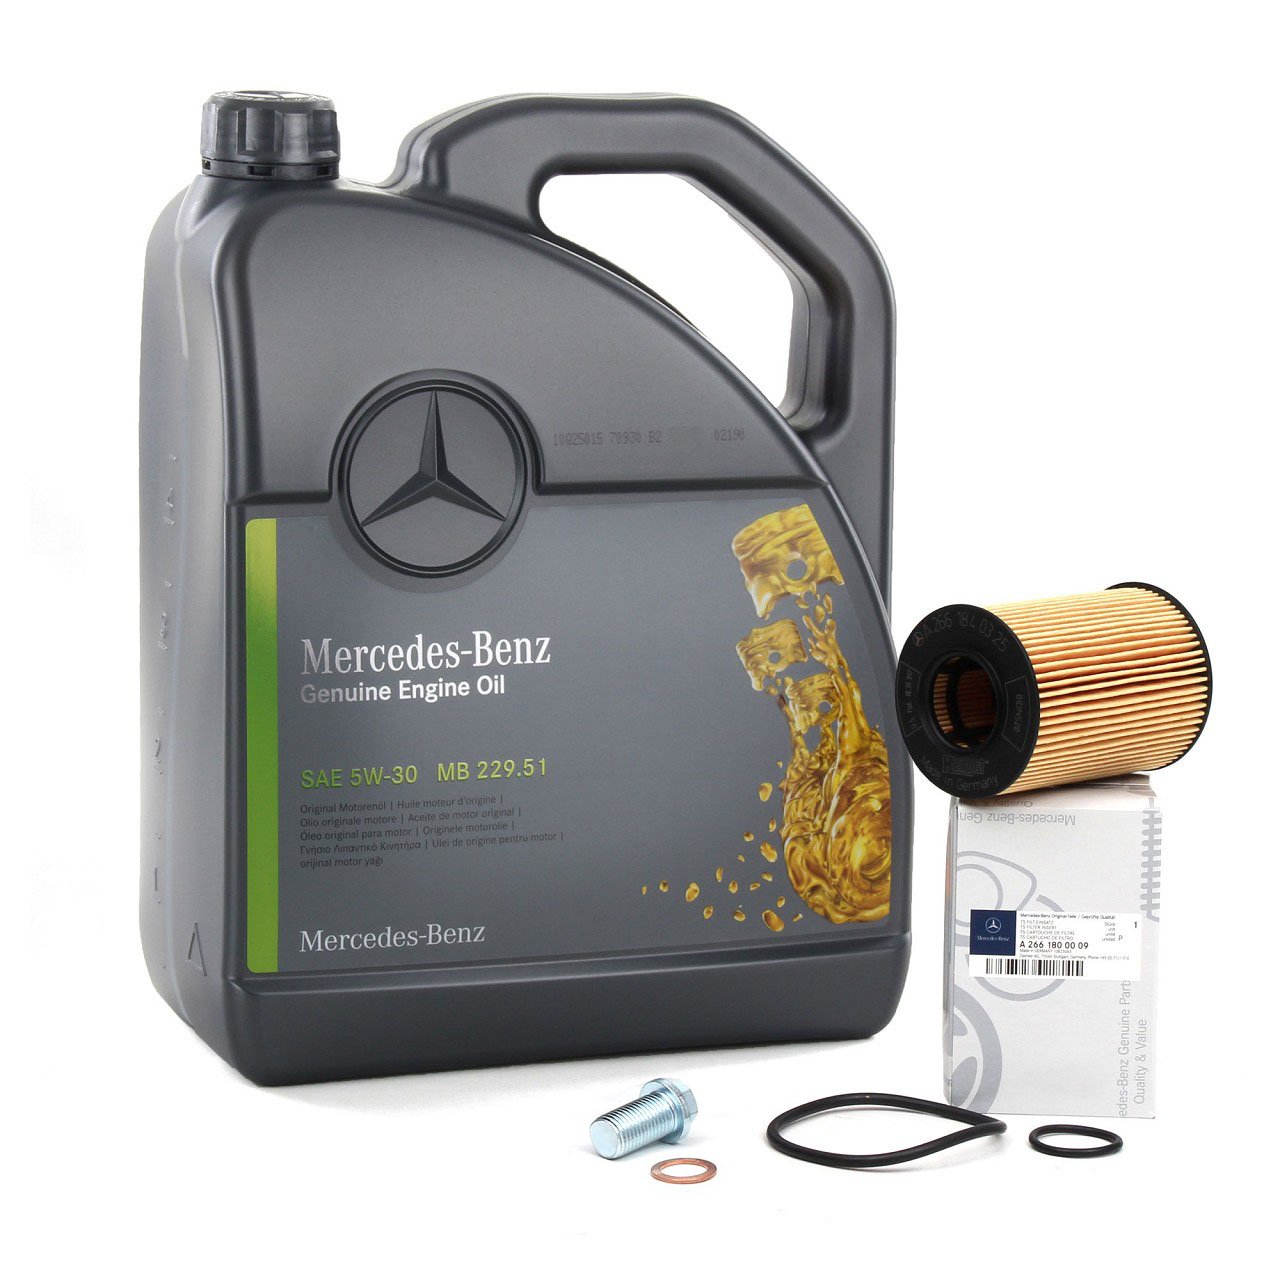 ORIGINAL Mercedes-Benz ÖL Motoröl 5W30 MB 229.51 5 Liter + Ölfilter 2661800009